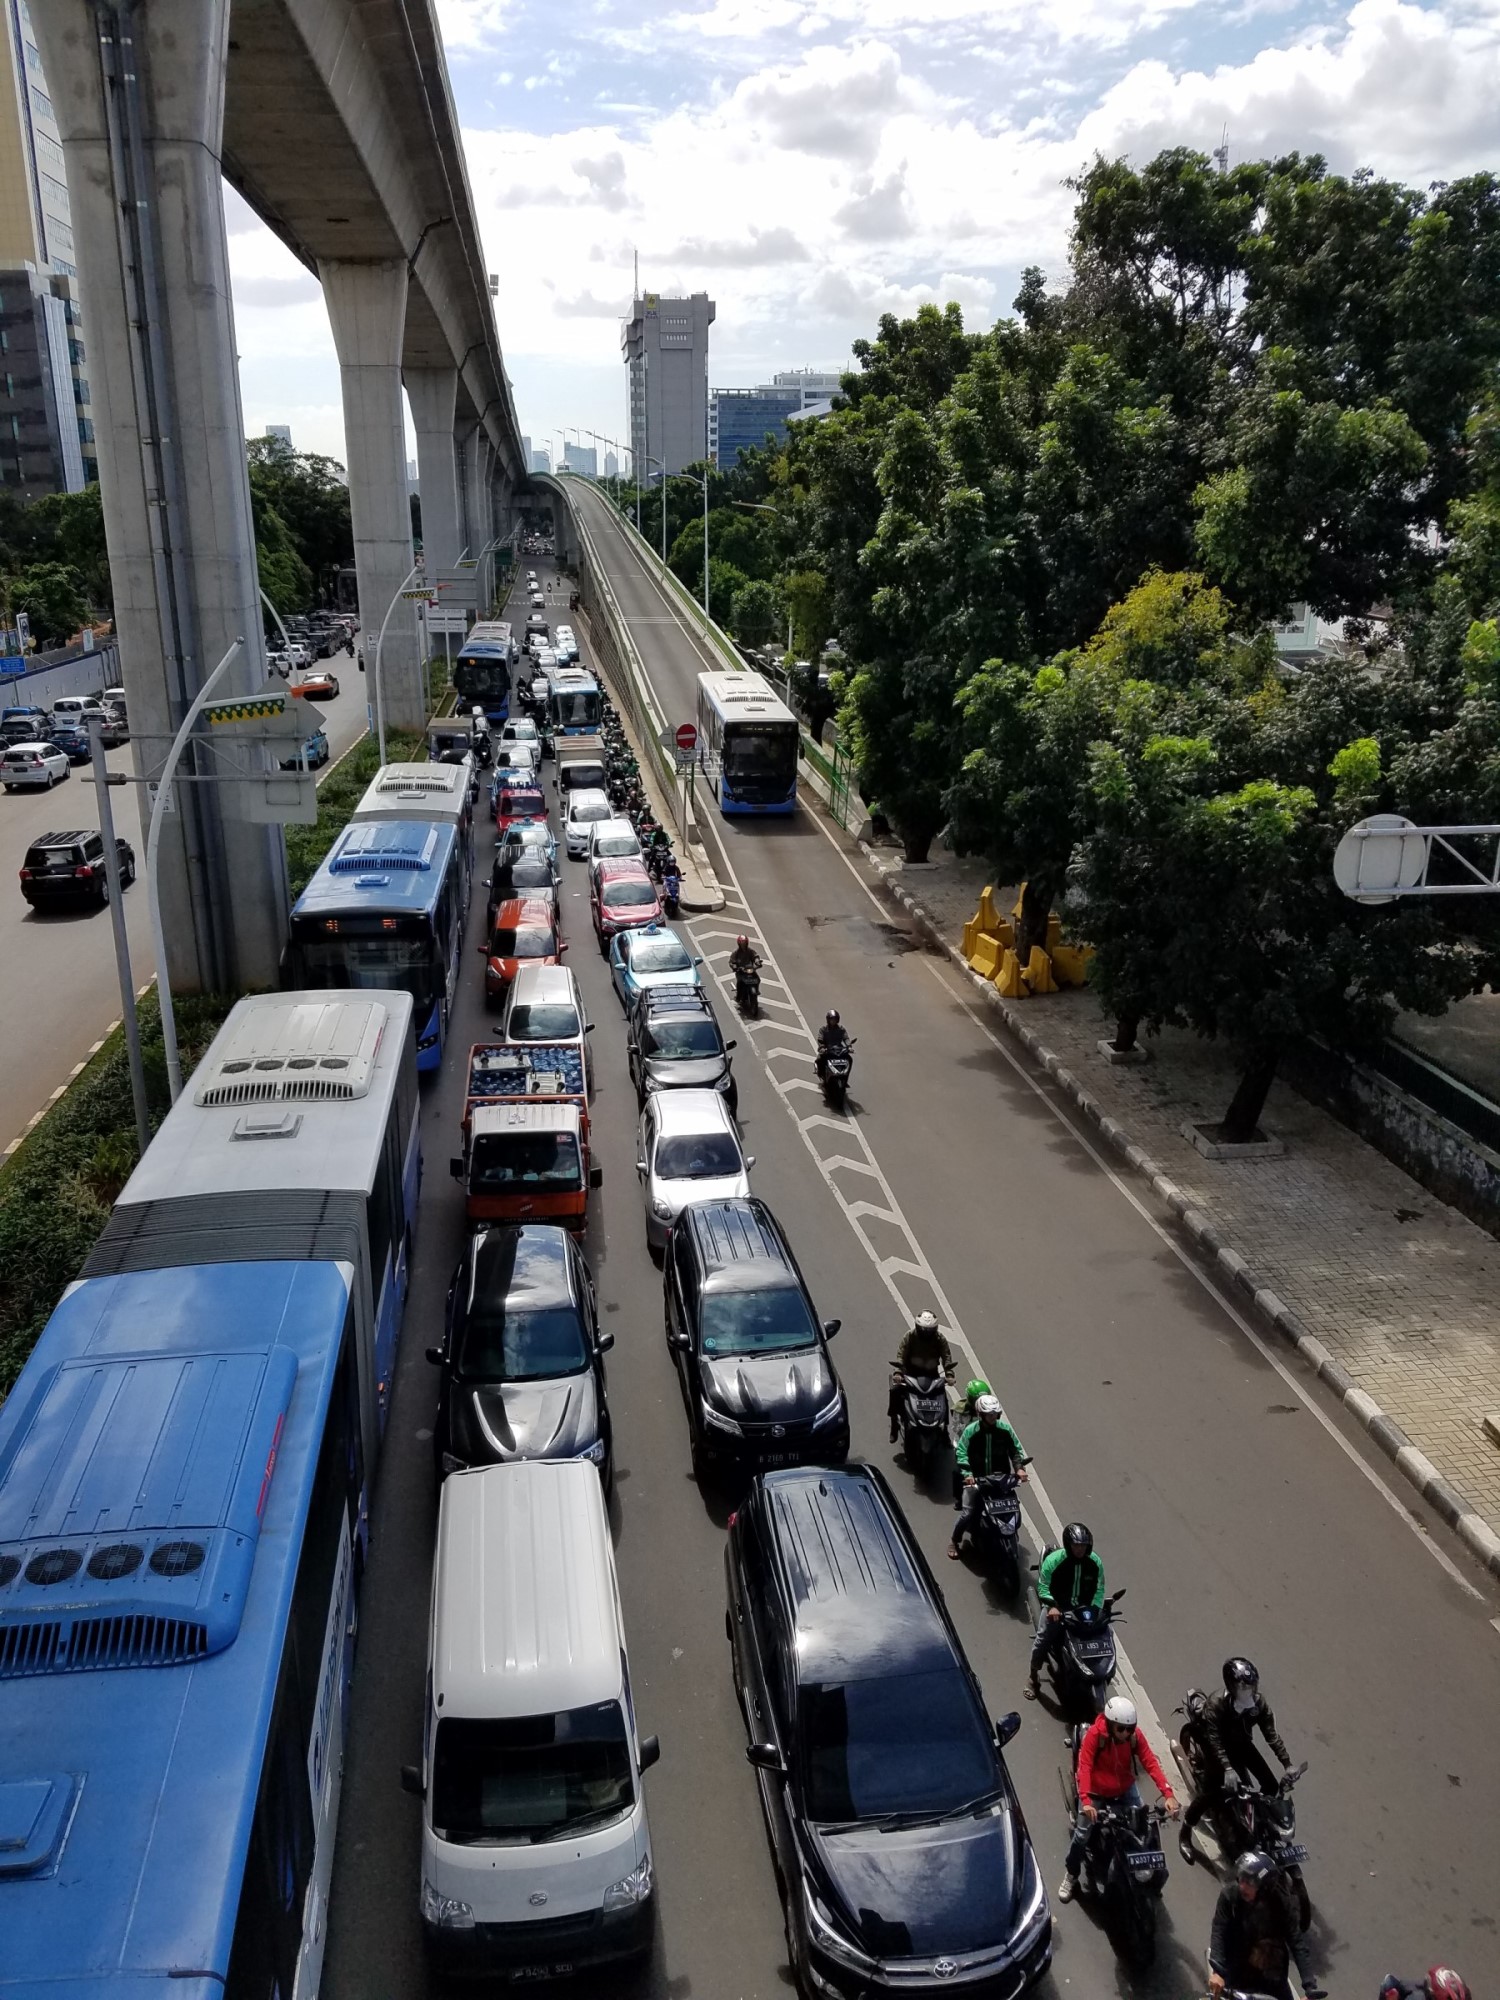 Jakarta's BRT system